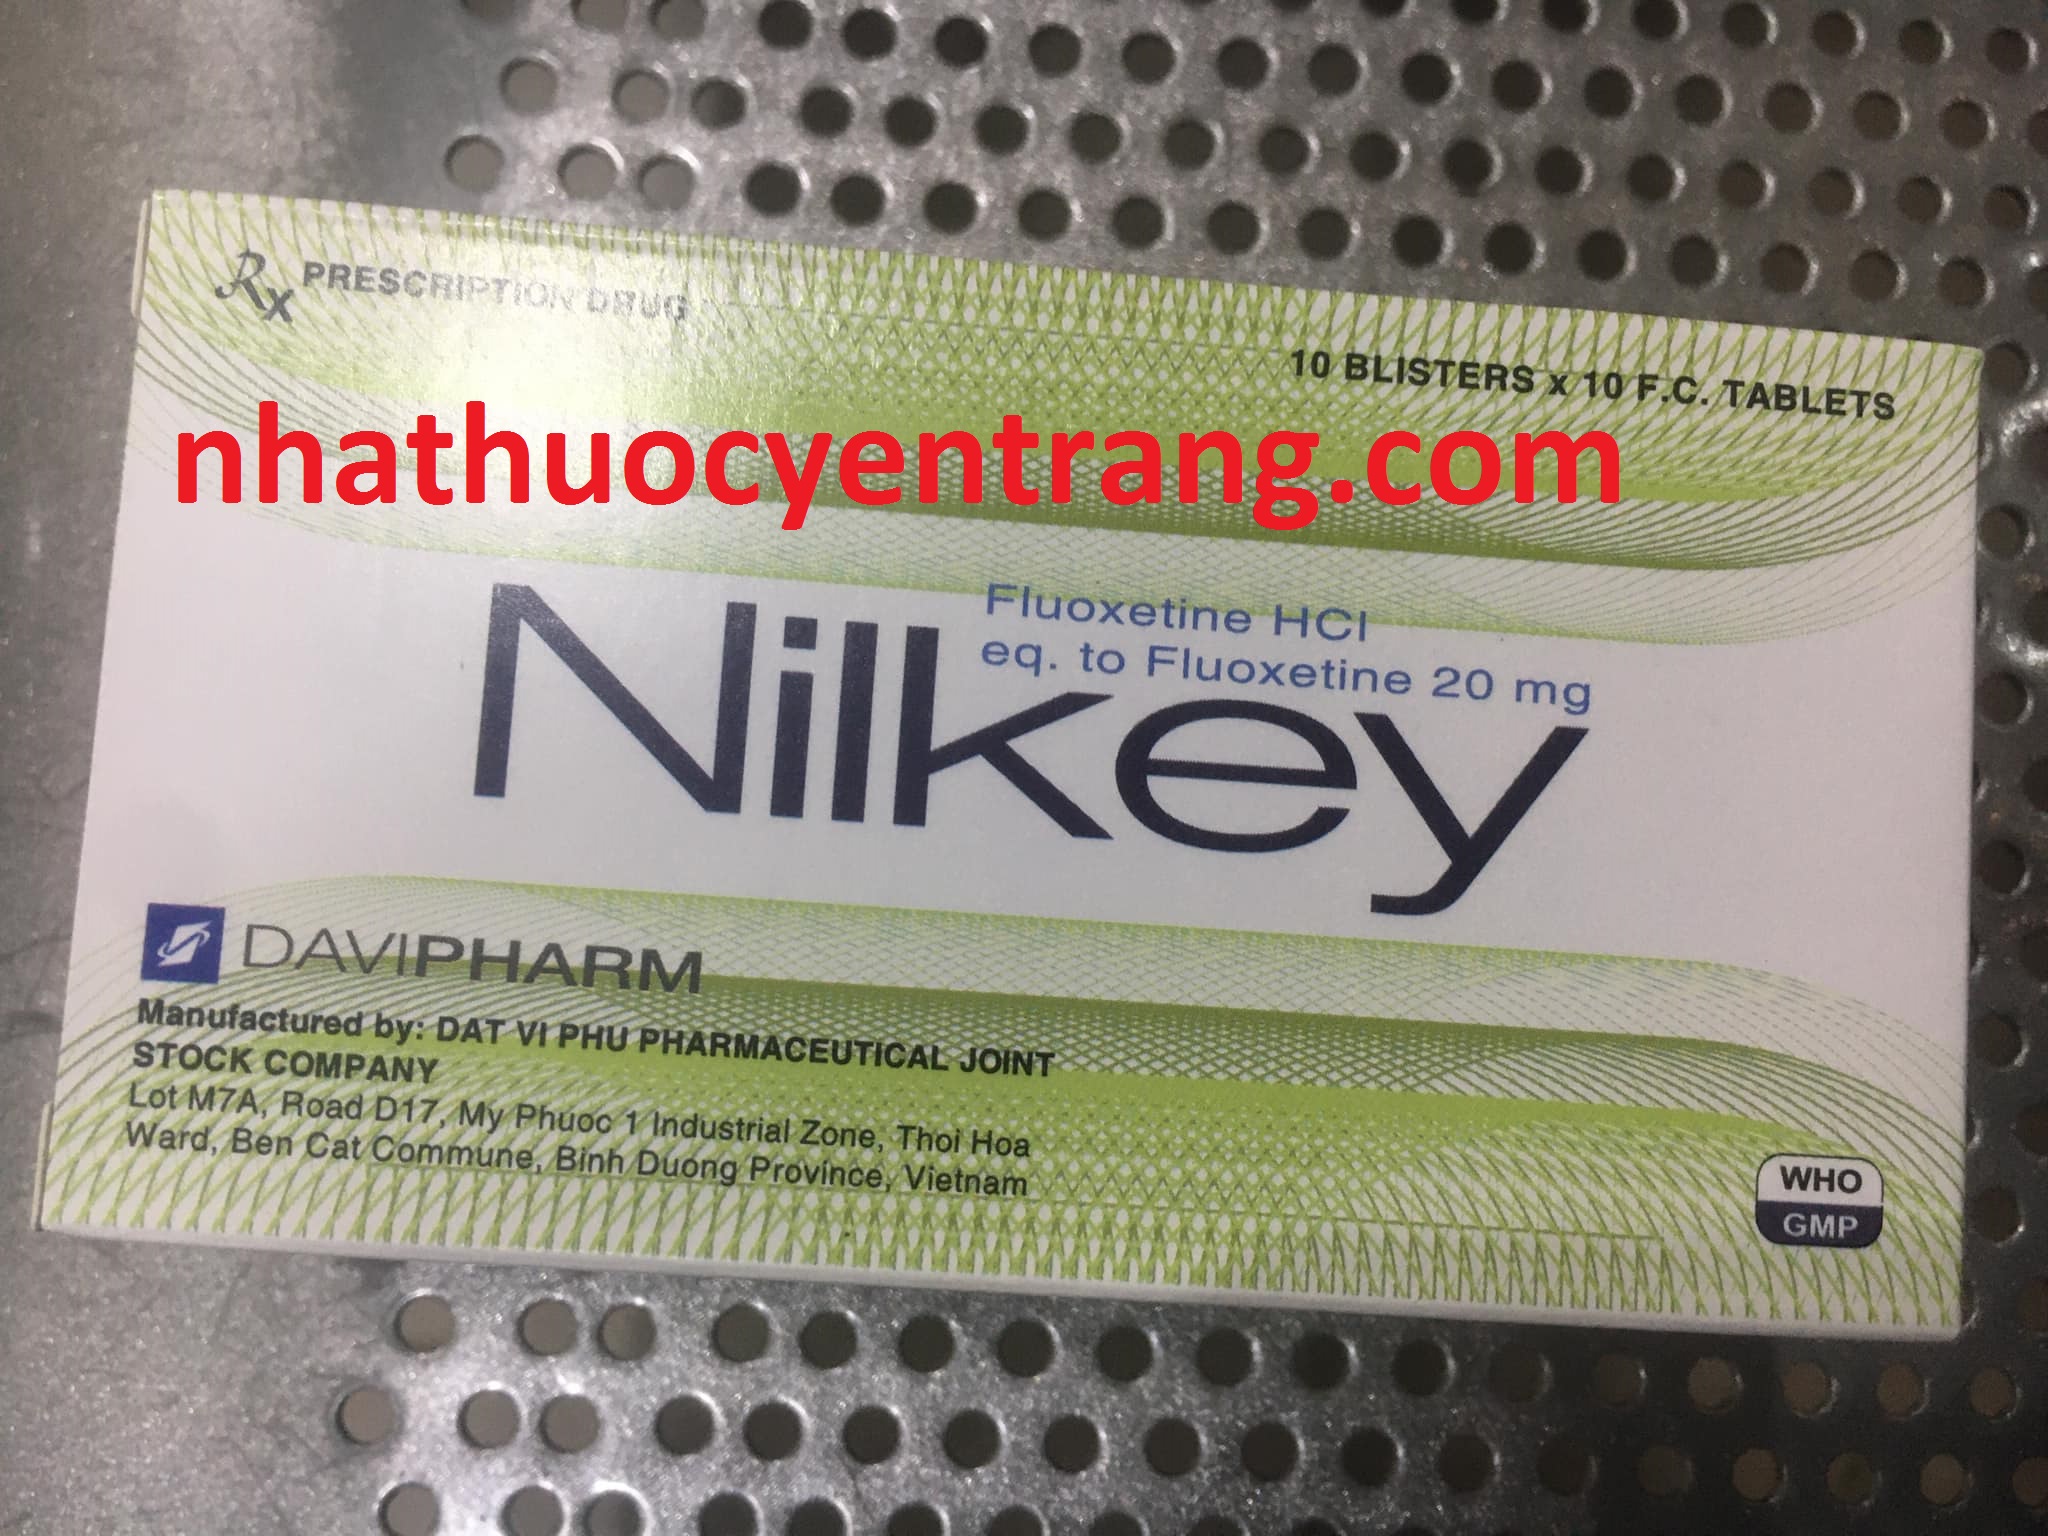 Nilkey